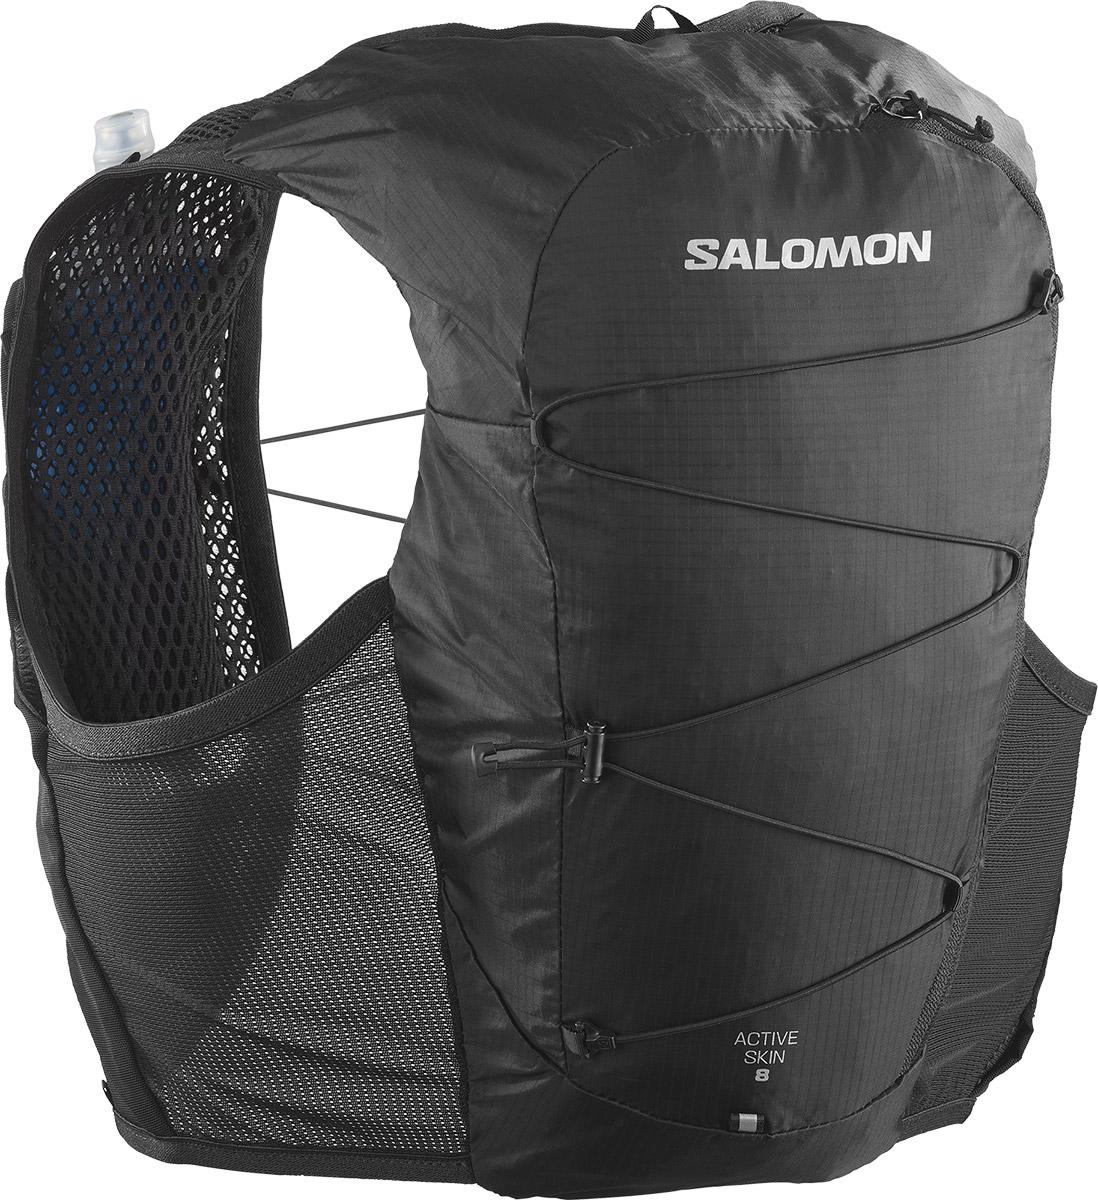 Salomon Active Skin 8 With Flasks - Black